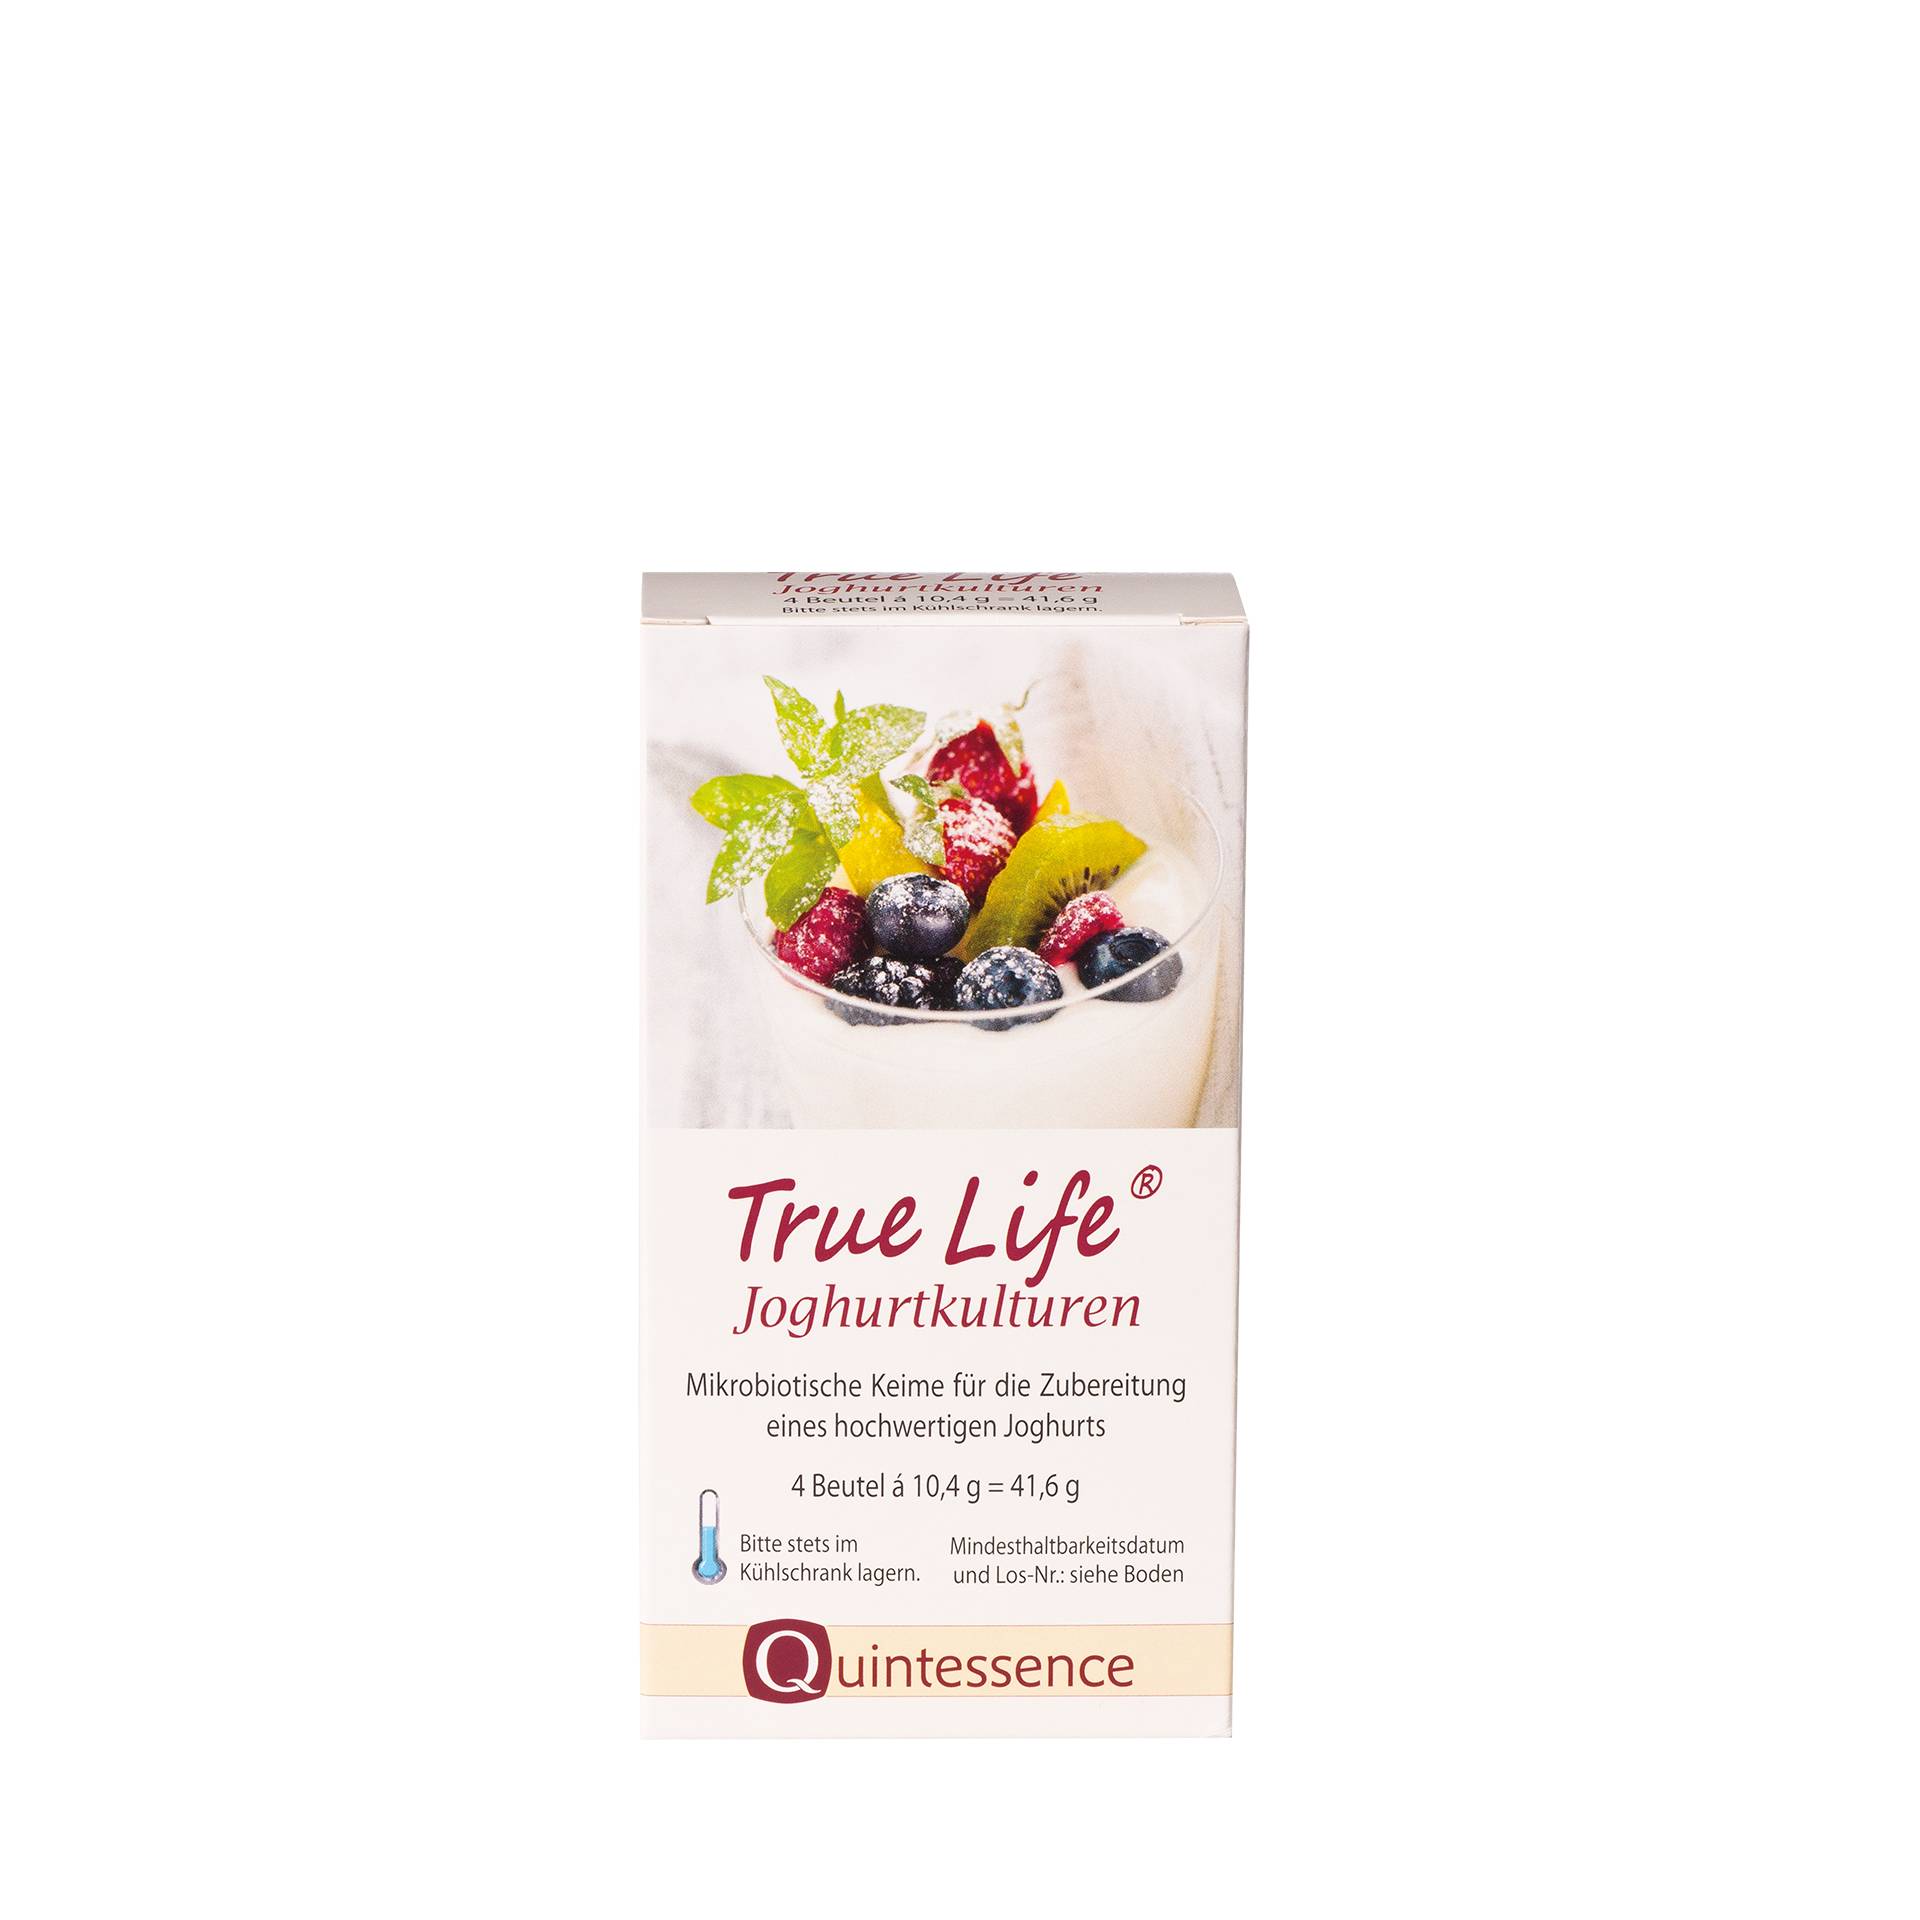 True Life Joghurtkulturen, 4 Beutel à 10,4 g von Quintessence